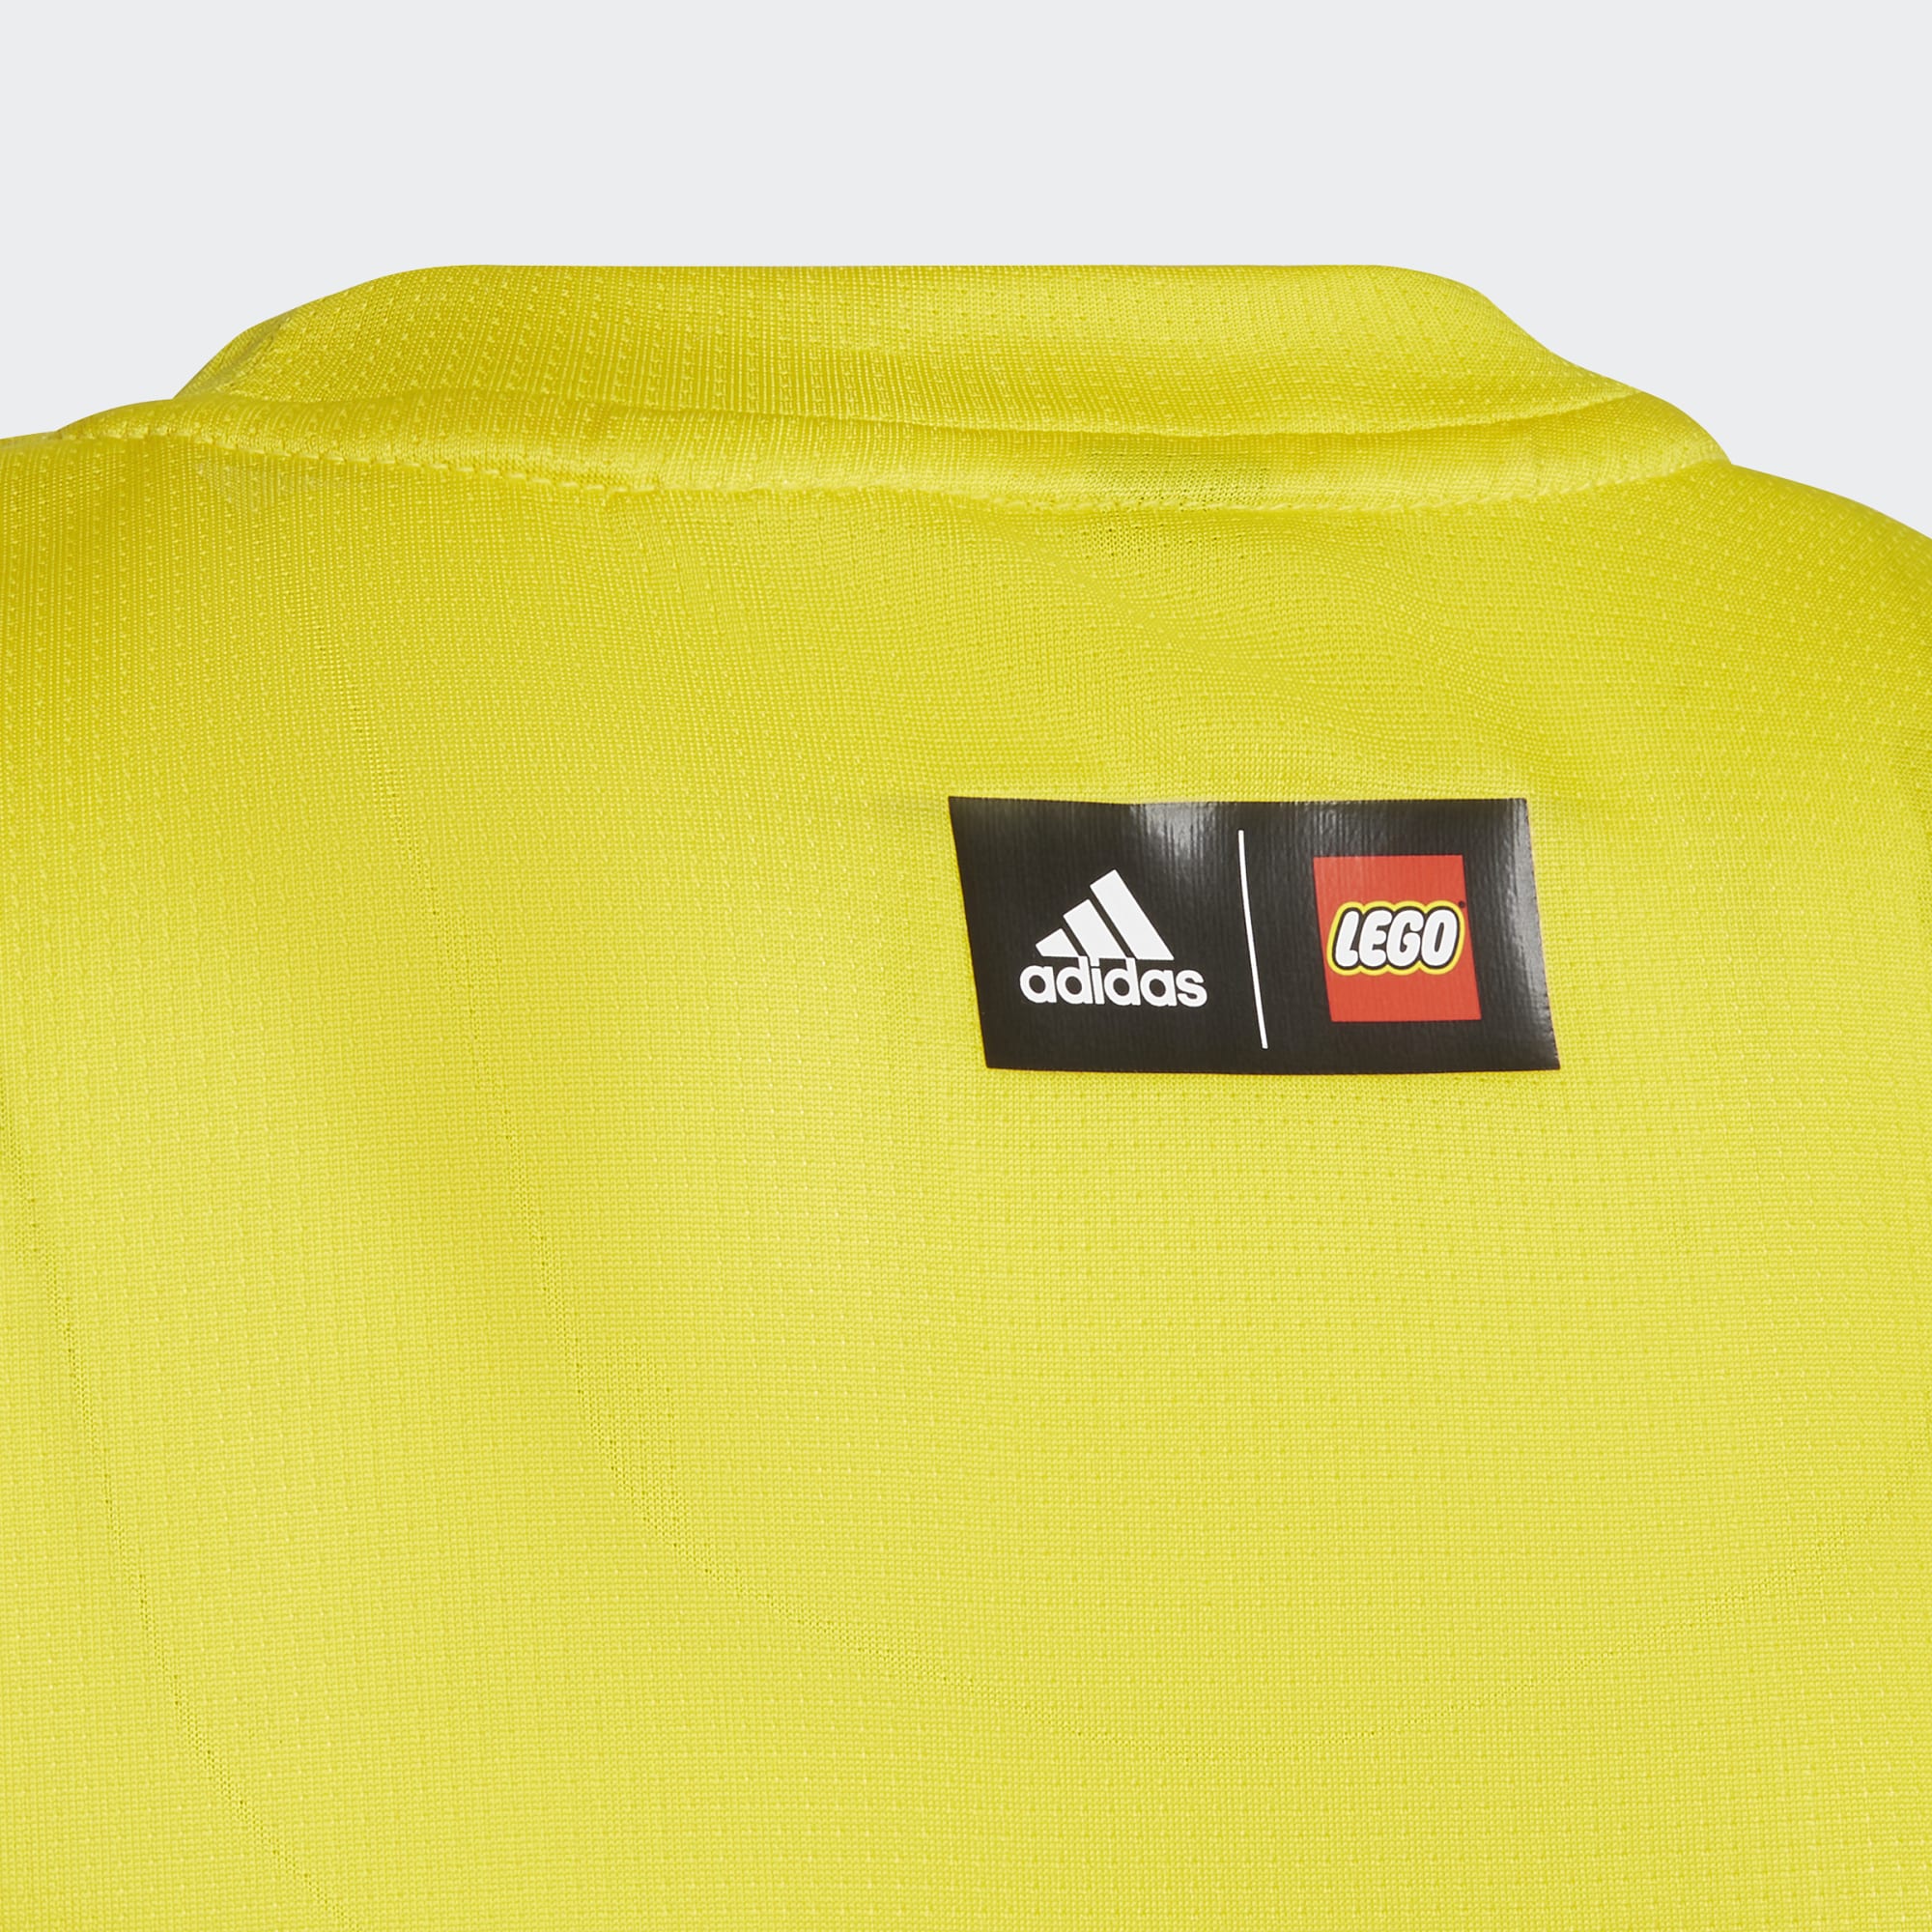 tradesports.co.uk Adidas X Lego Play Vest Tank Top H65321